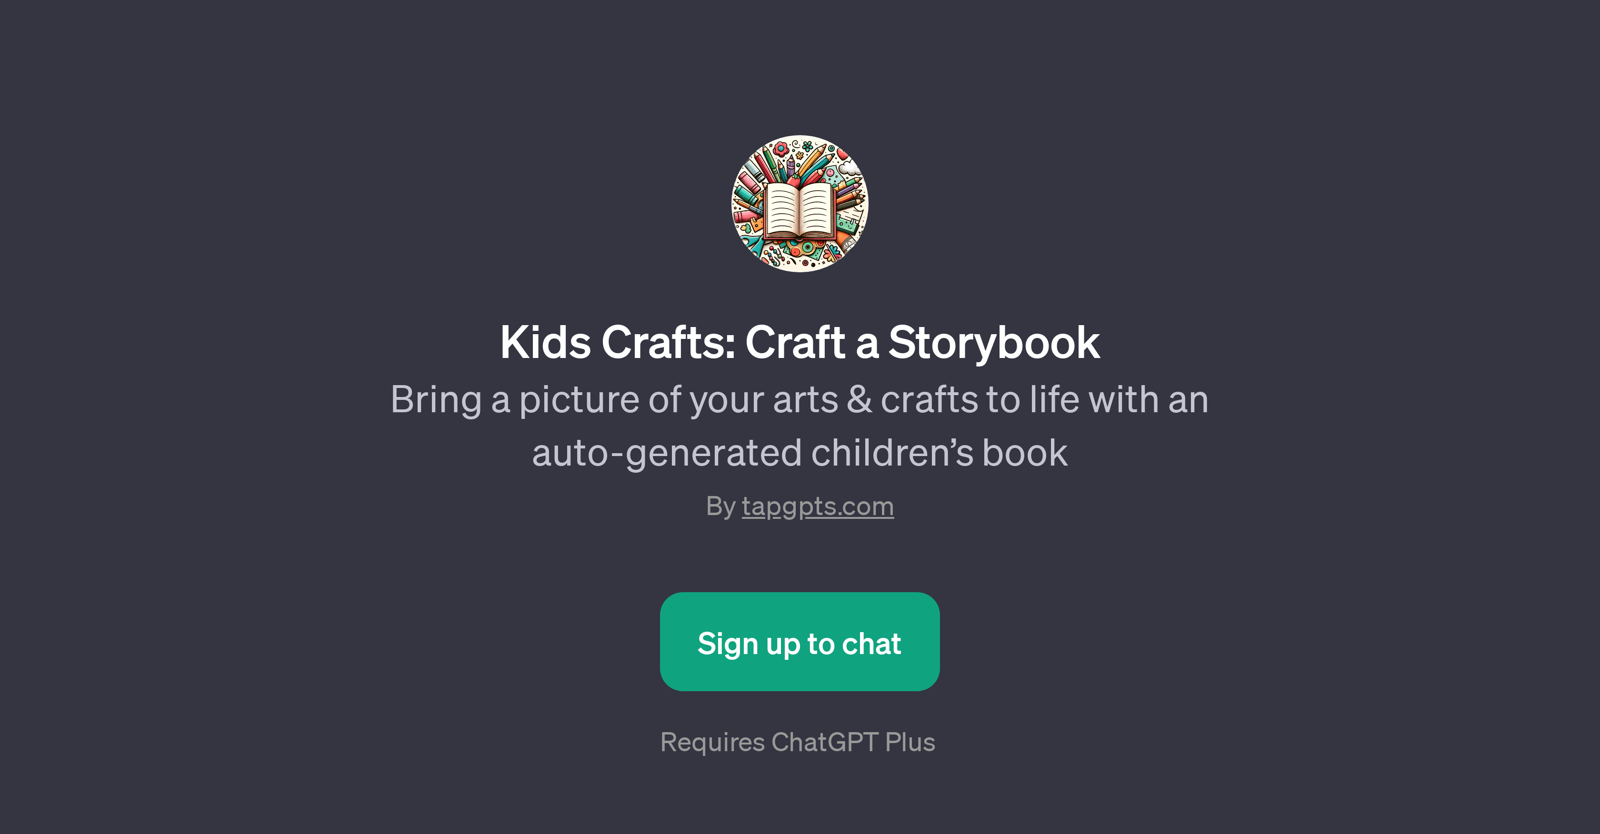 Kids Crafts: Craft a Storybook - Crafts storytelling - TAAFT